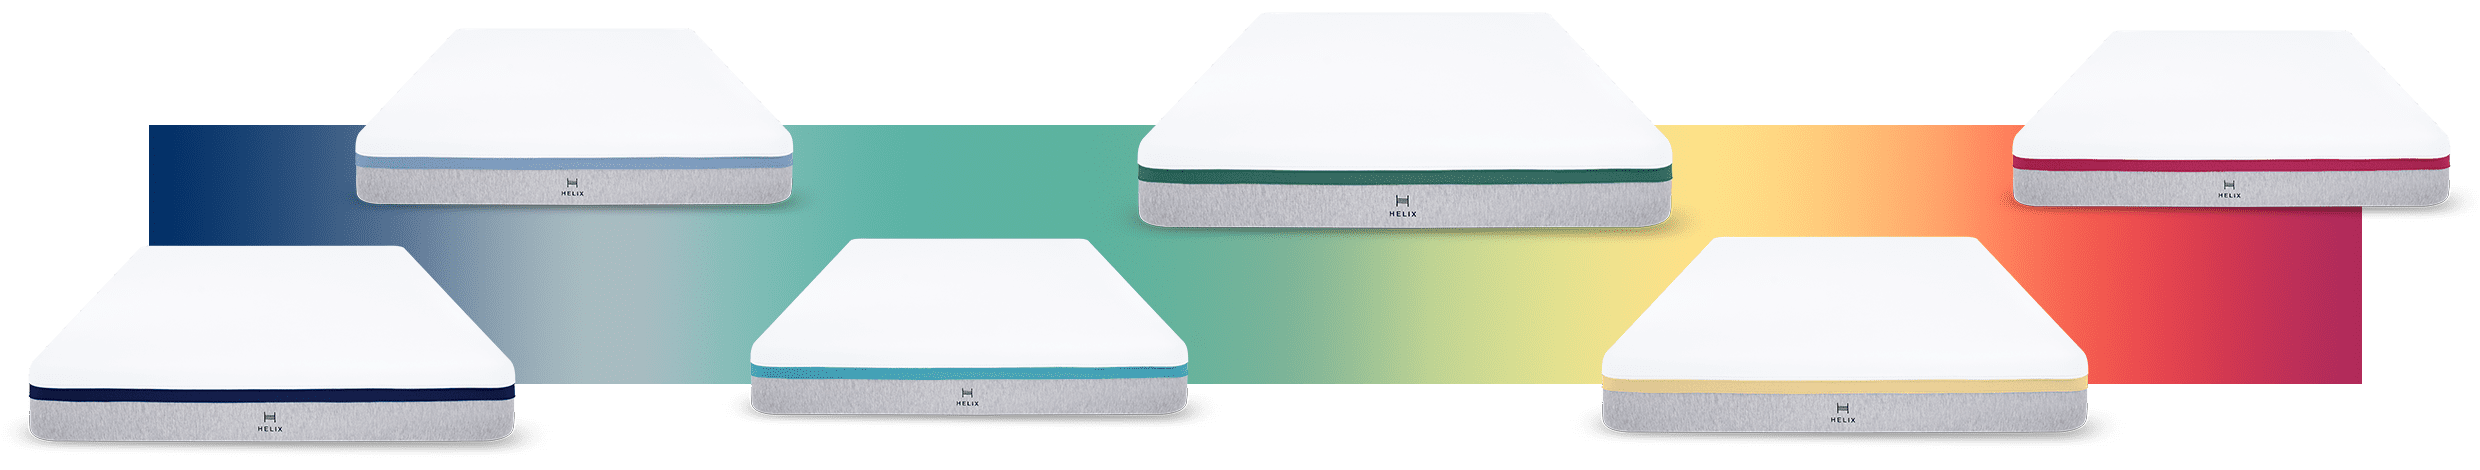 Series of Helix mattresses along a rainbow spectrum